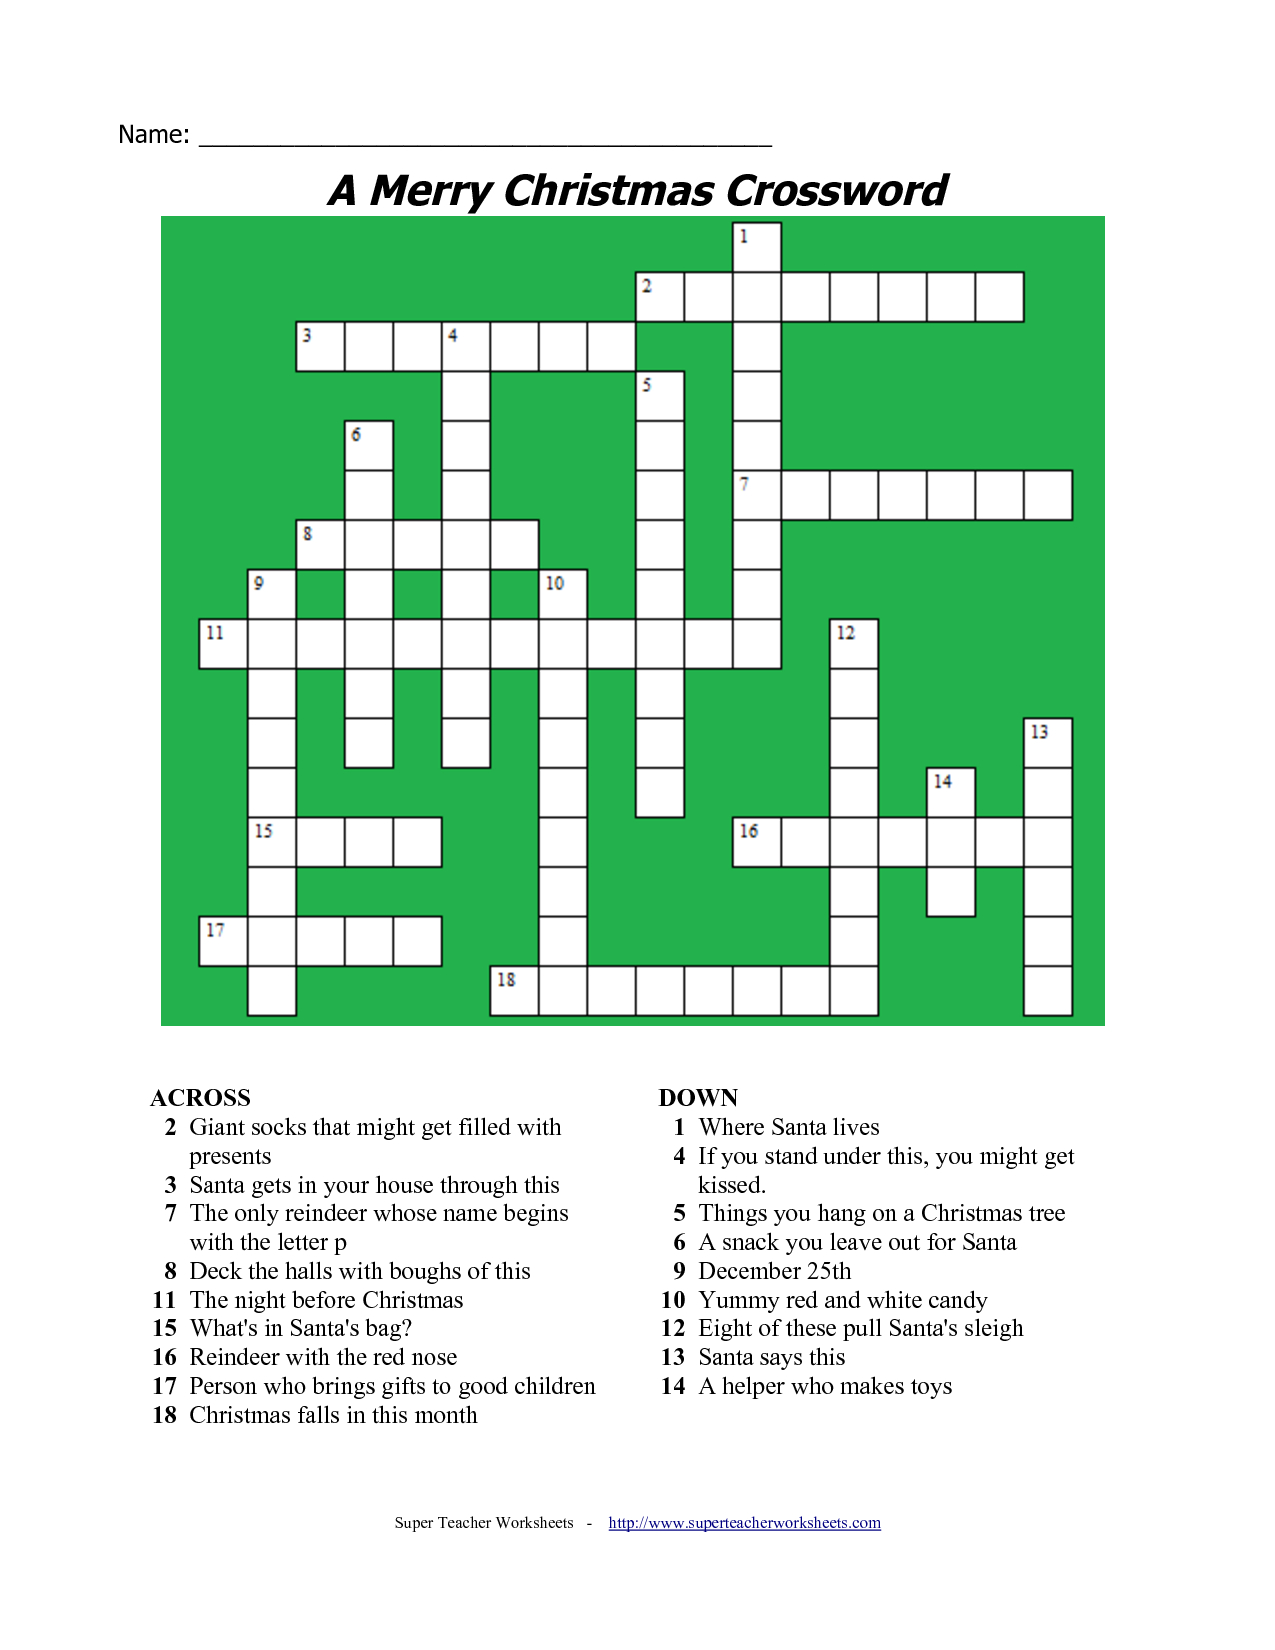 20 Fun Printable Christmas Crossword Puzzles | Kittybabylove - Printable Christmas Crossword Puzzles Pdf